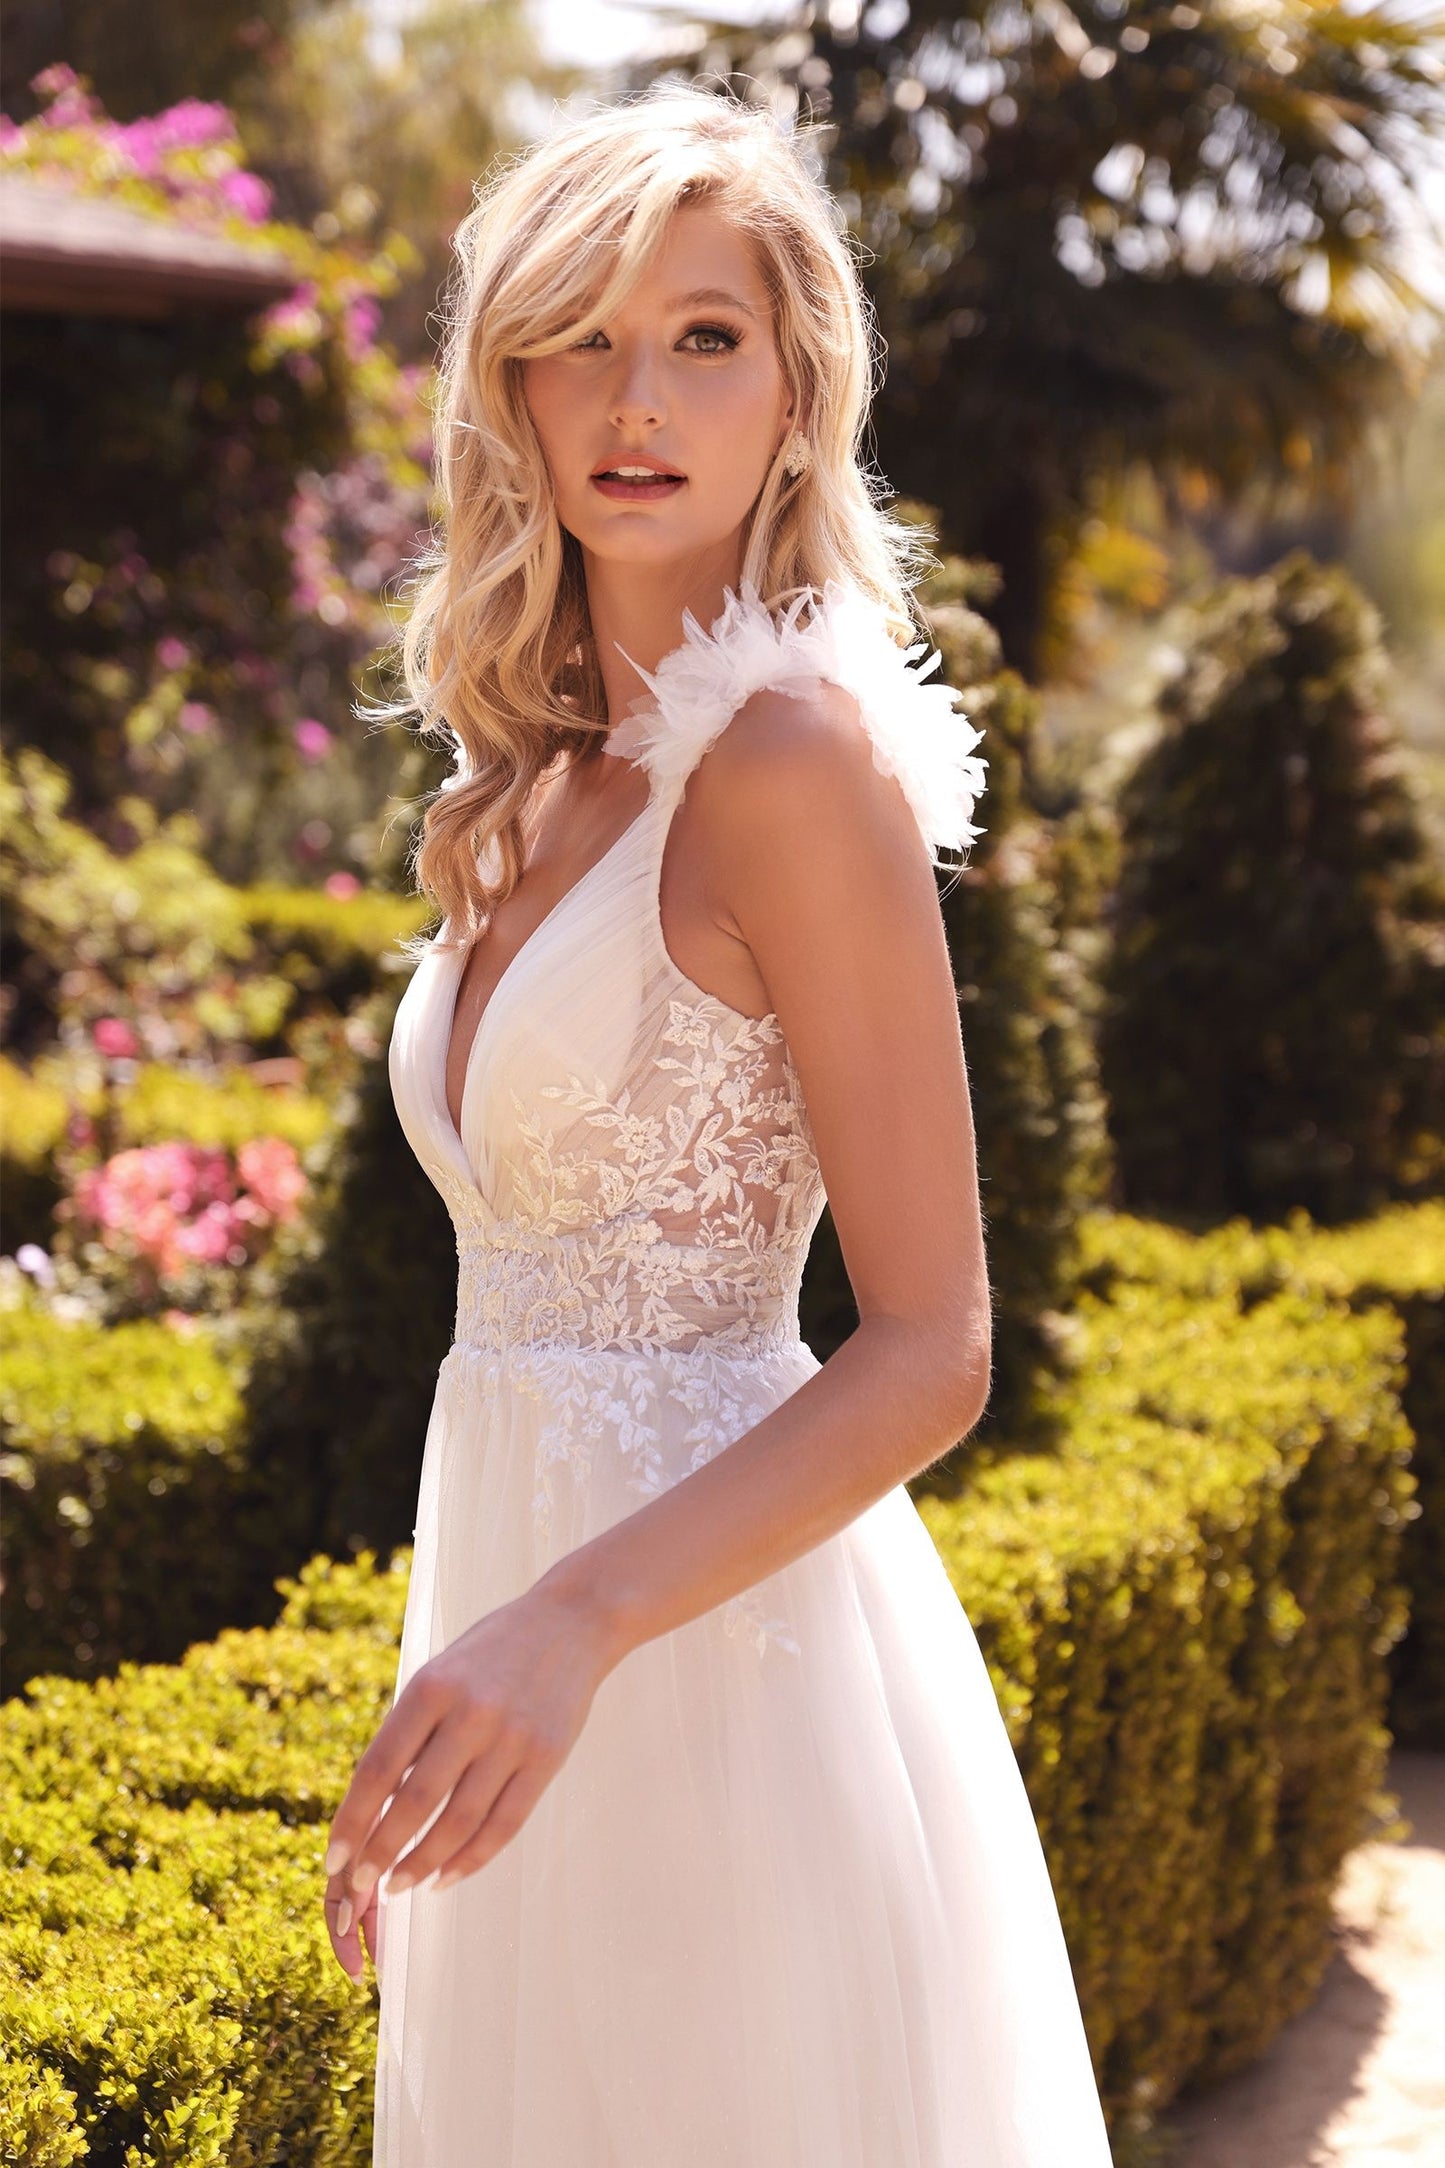 Bridal A-Line Gown